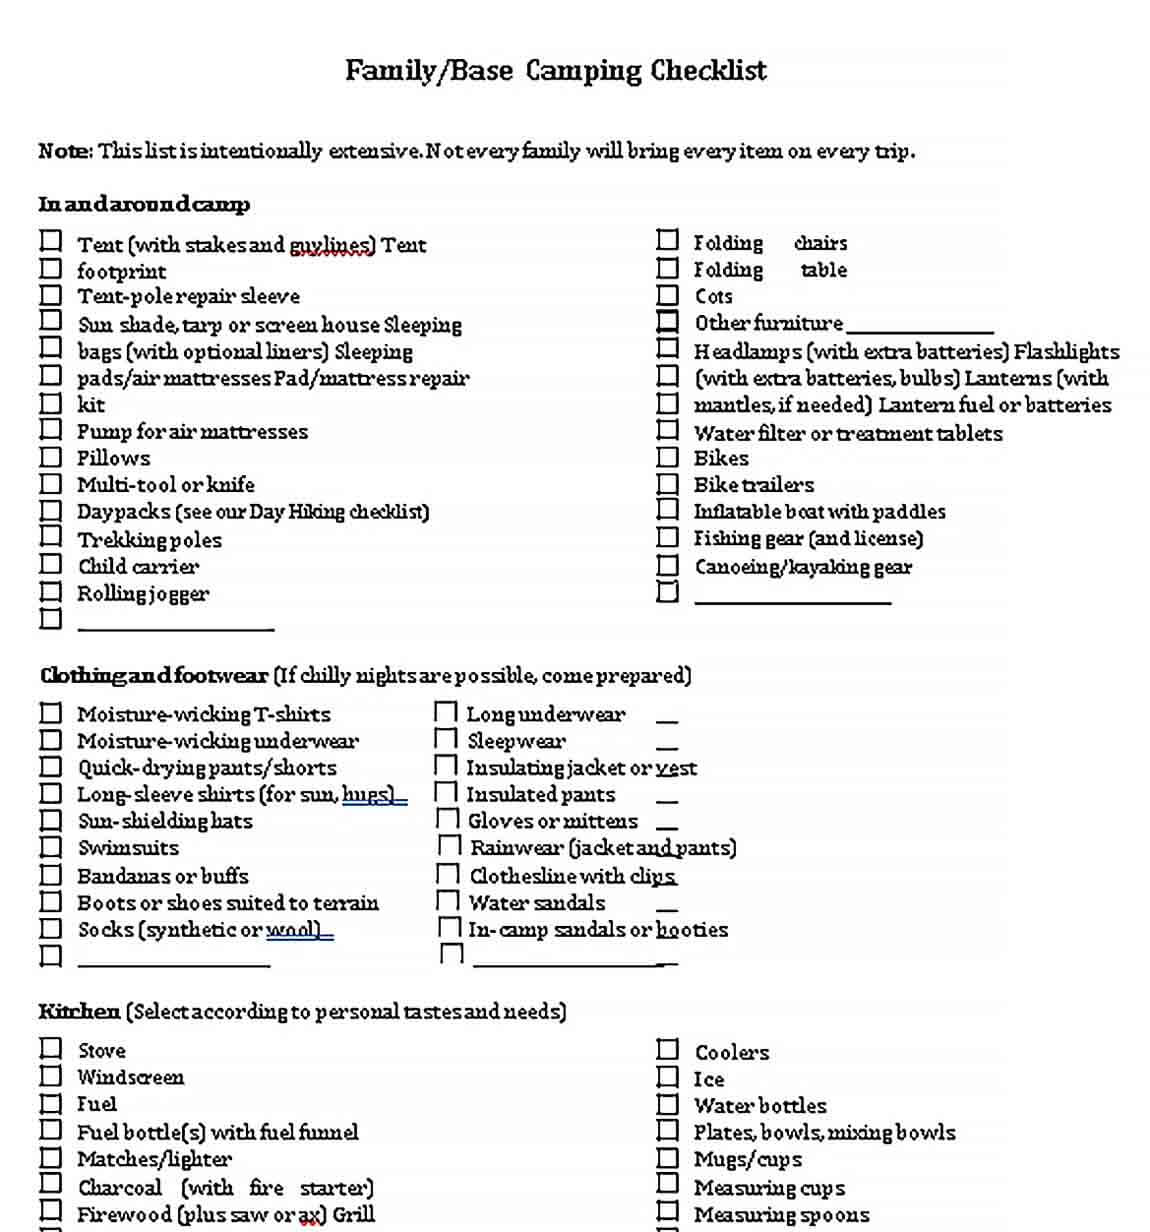 Sample Family Camping Checklist